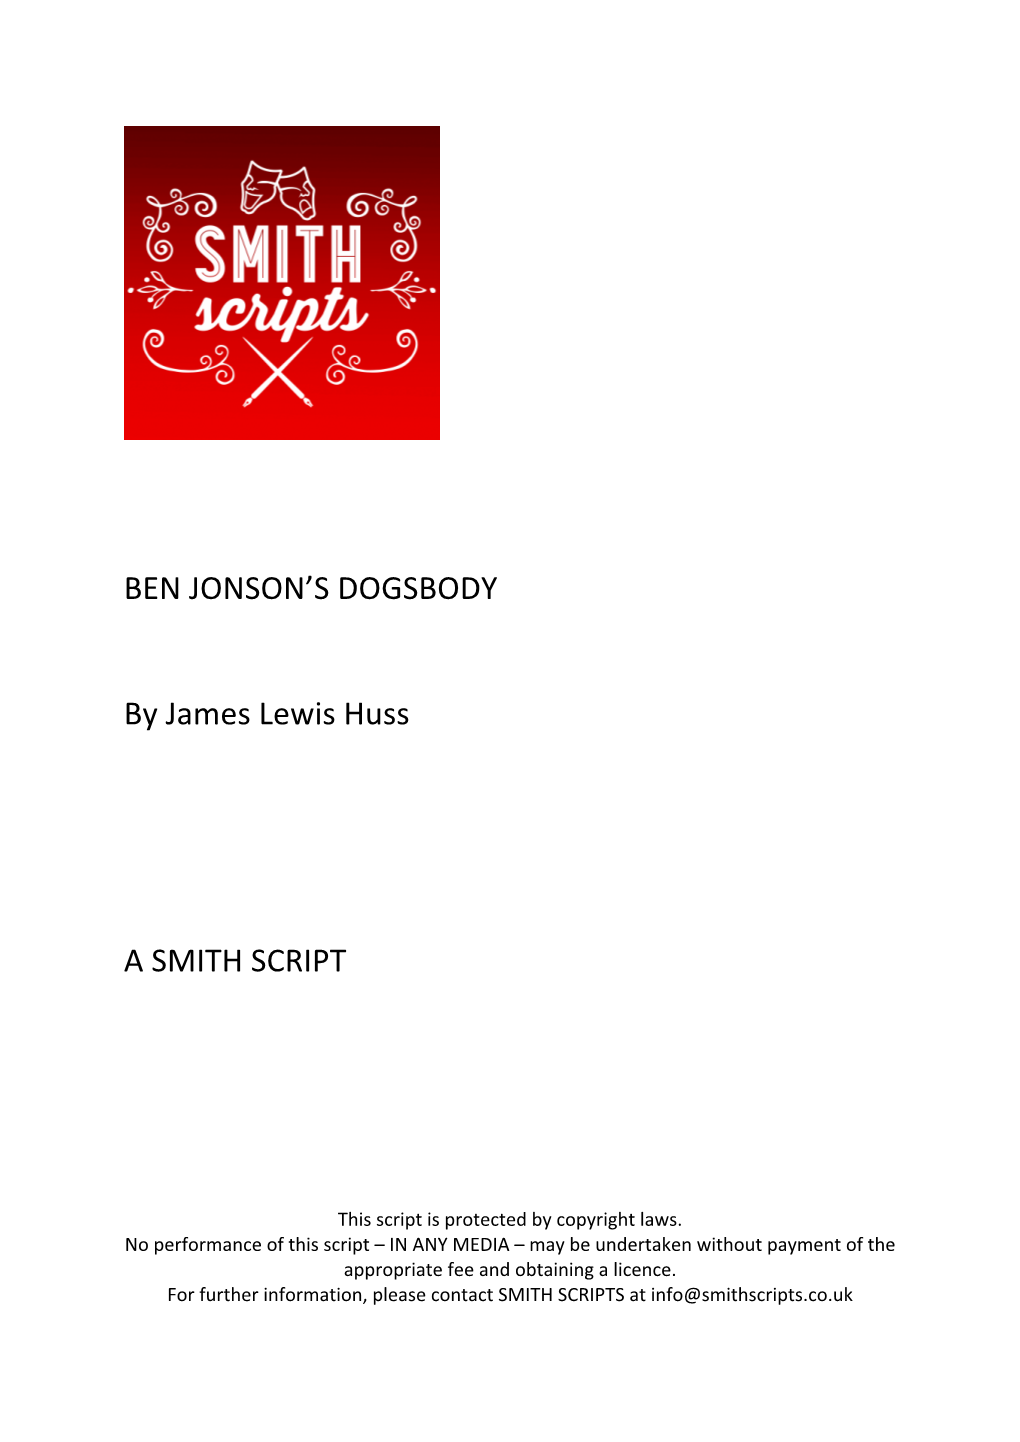 BEN JONSON's DOGSBODY by James Lewis Huss a SMITH SCRIPT